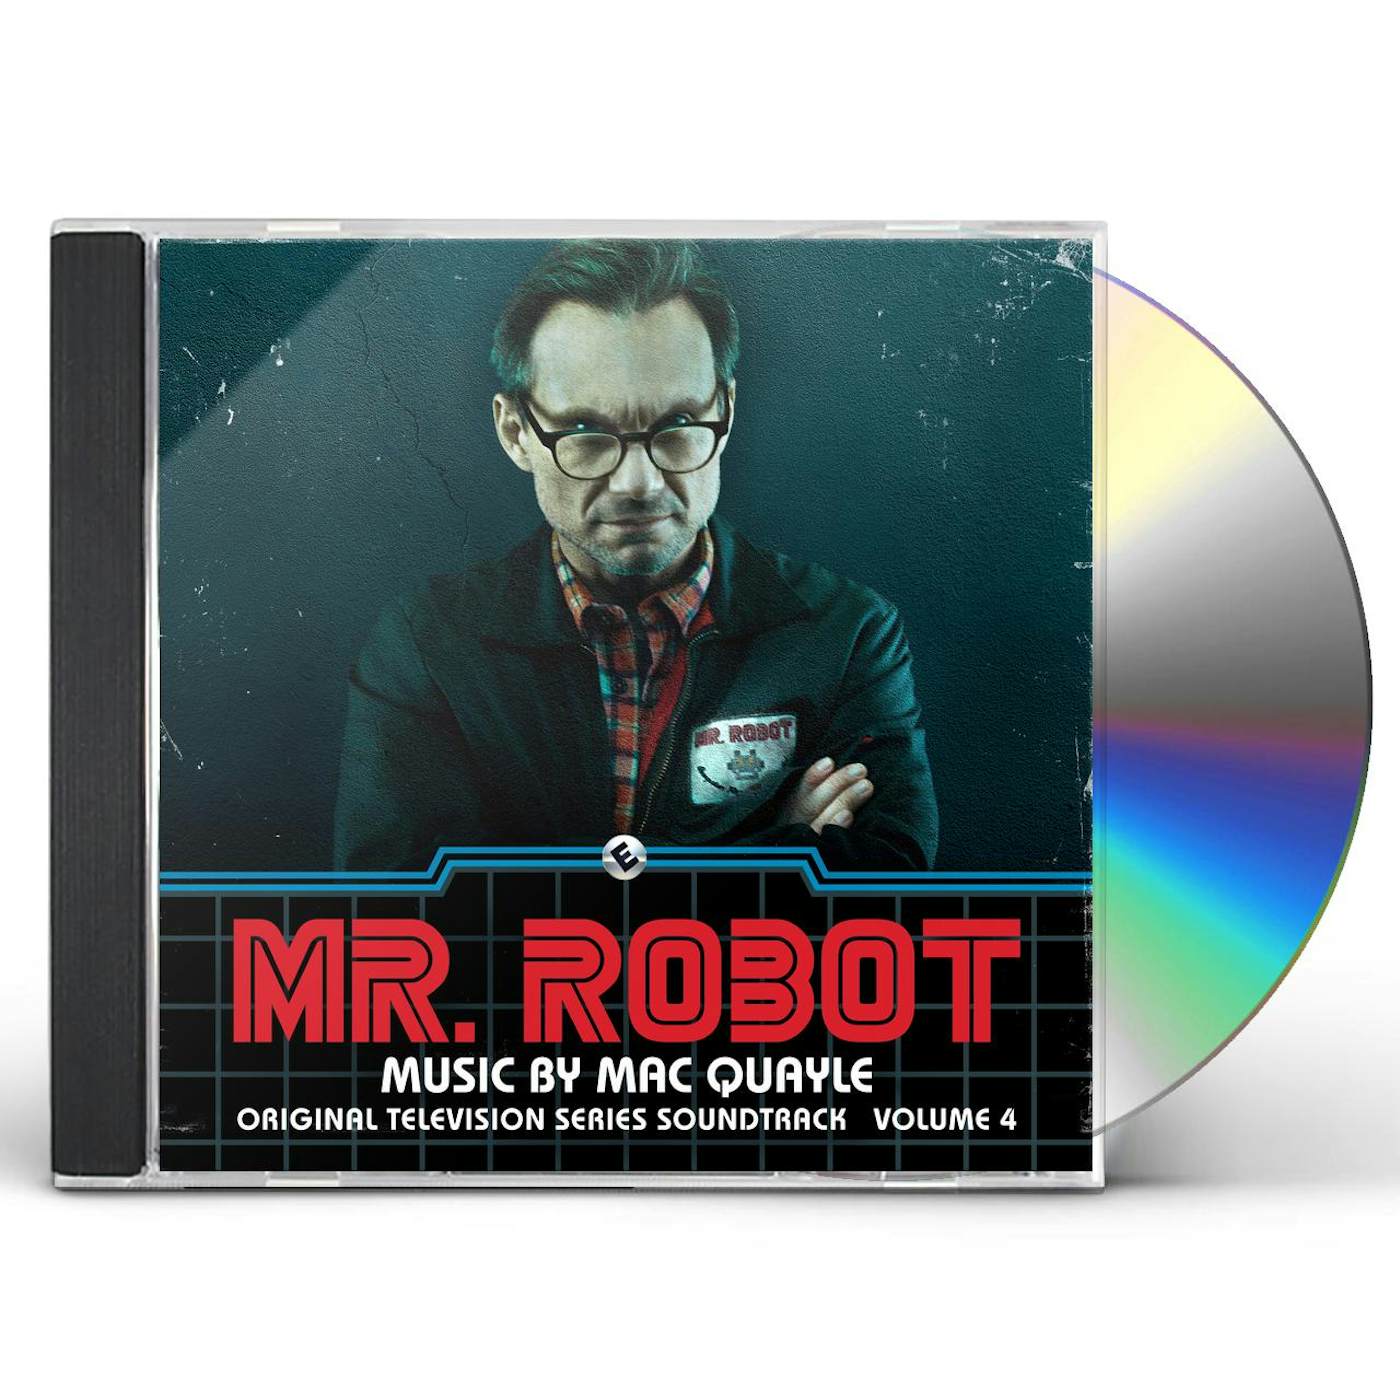  Mr. Robot - Volume 1 (Original Television Series